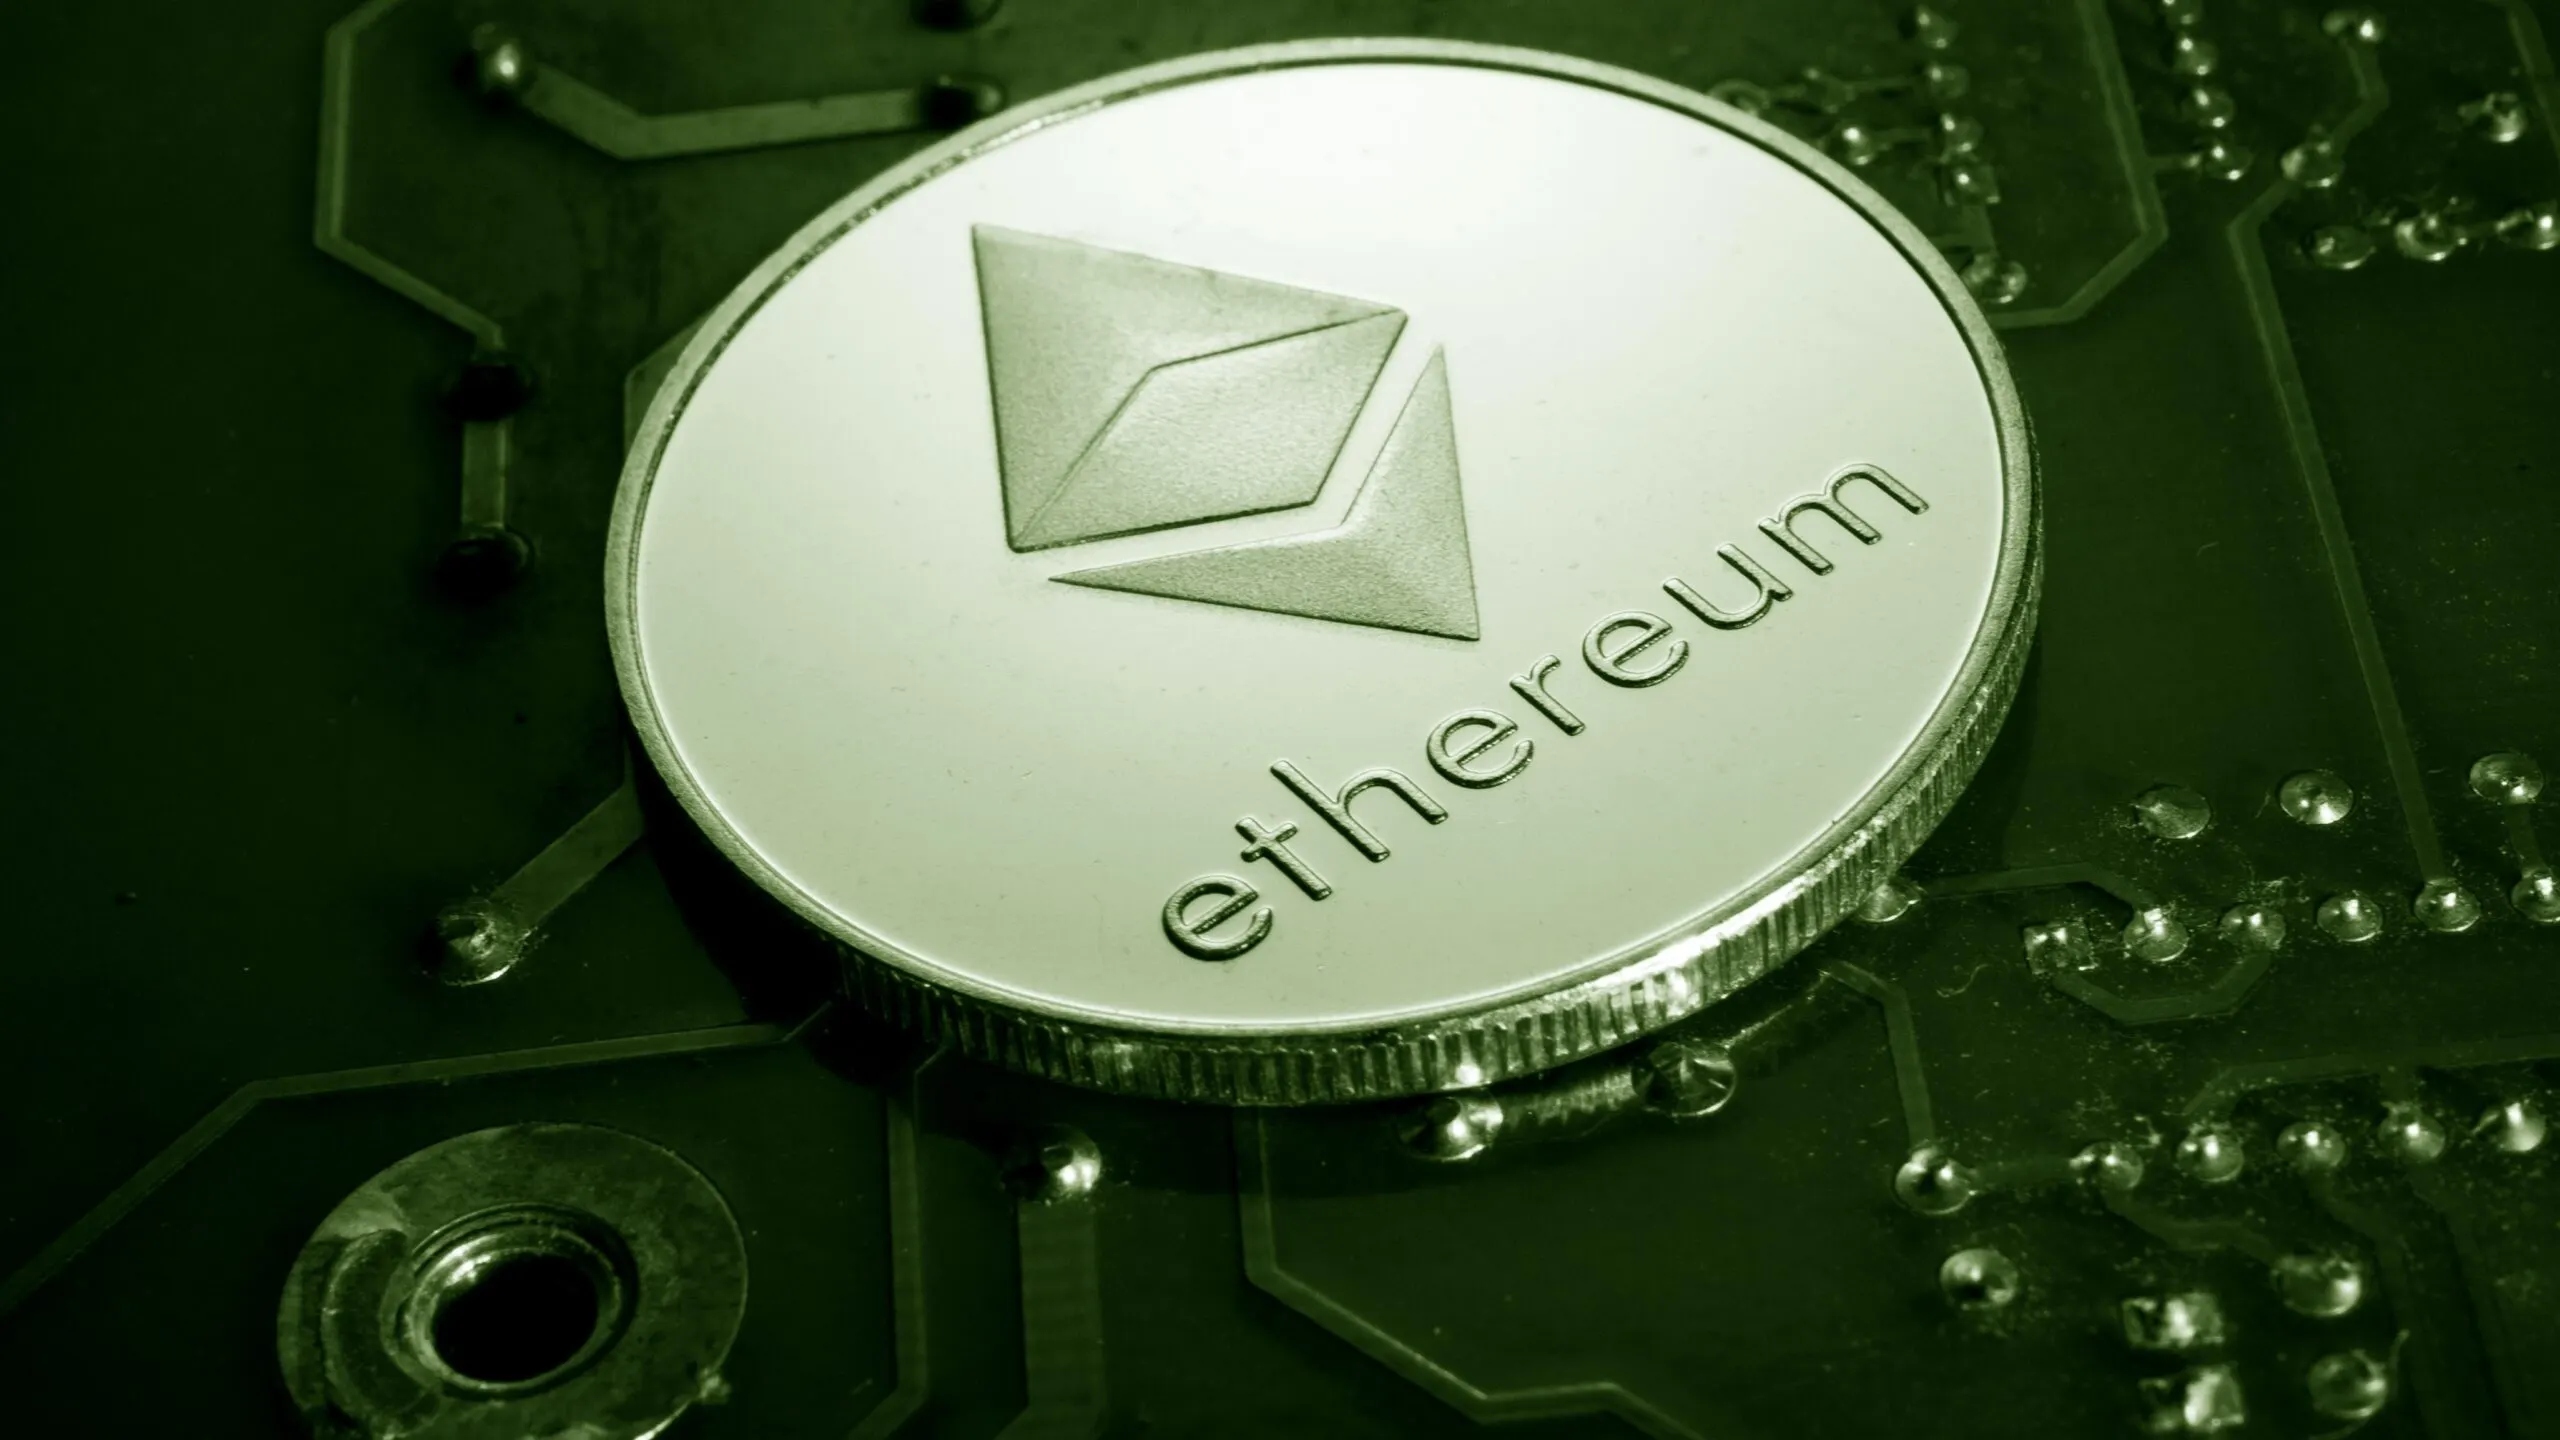 Ethereum coin